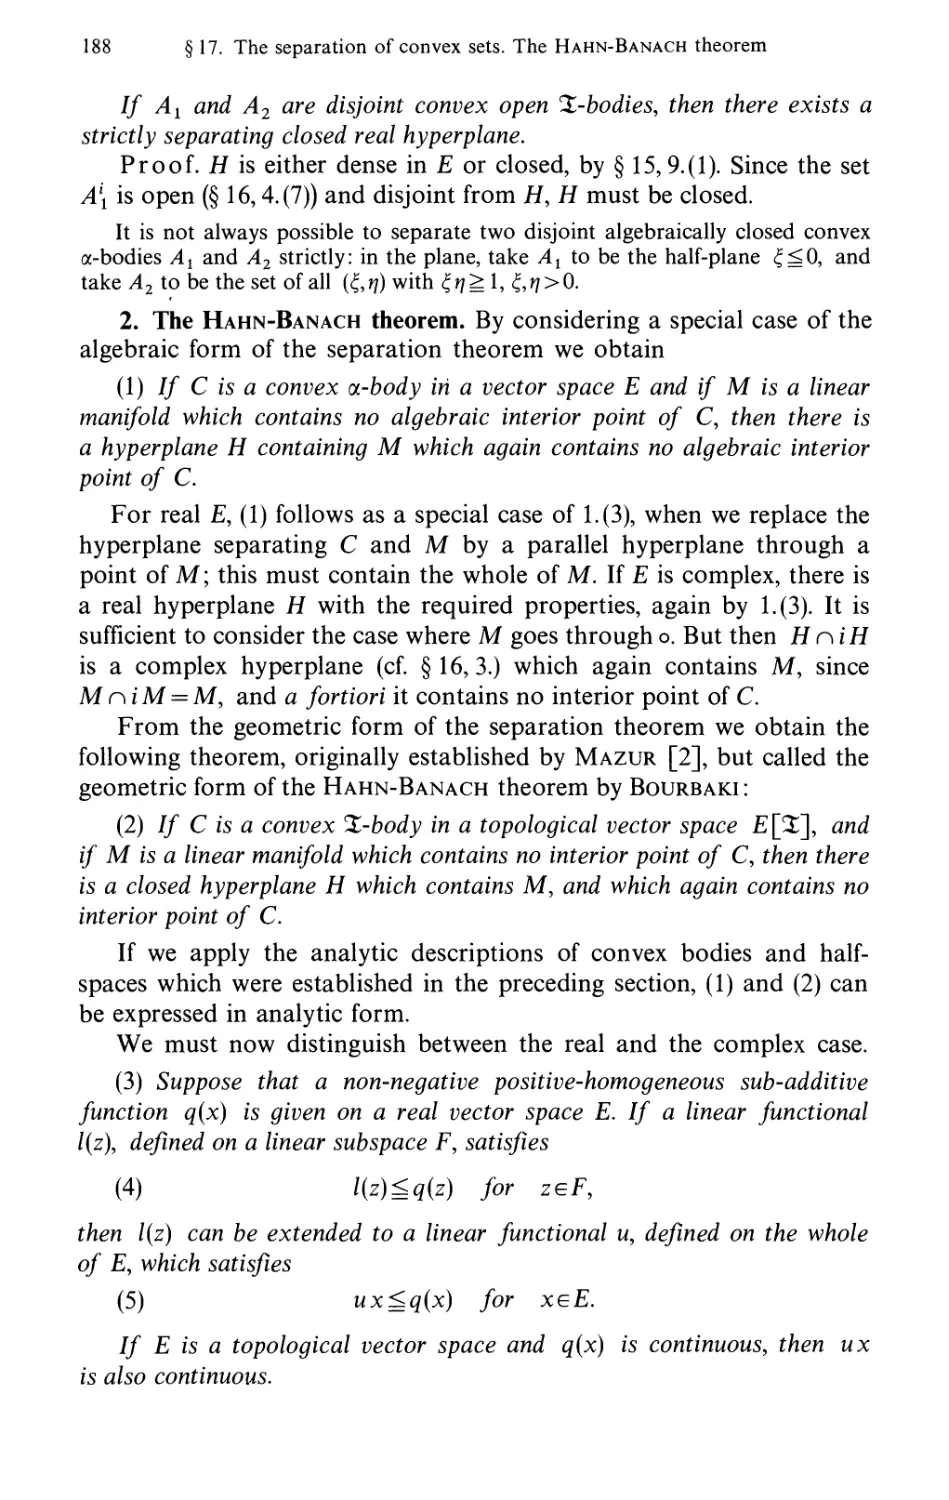 2. The Hahn-Banach theorem